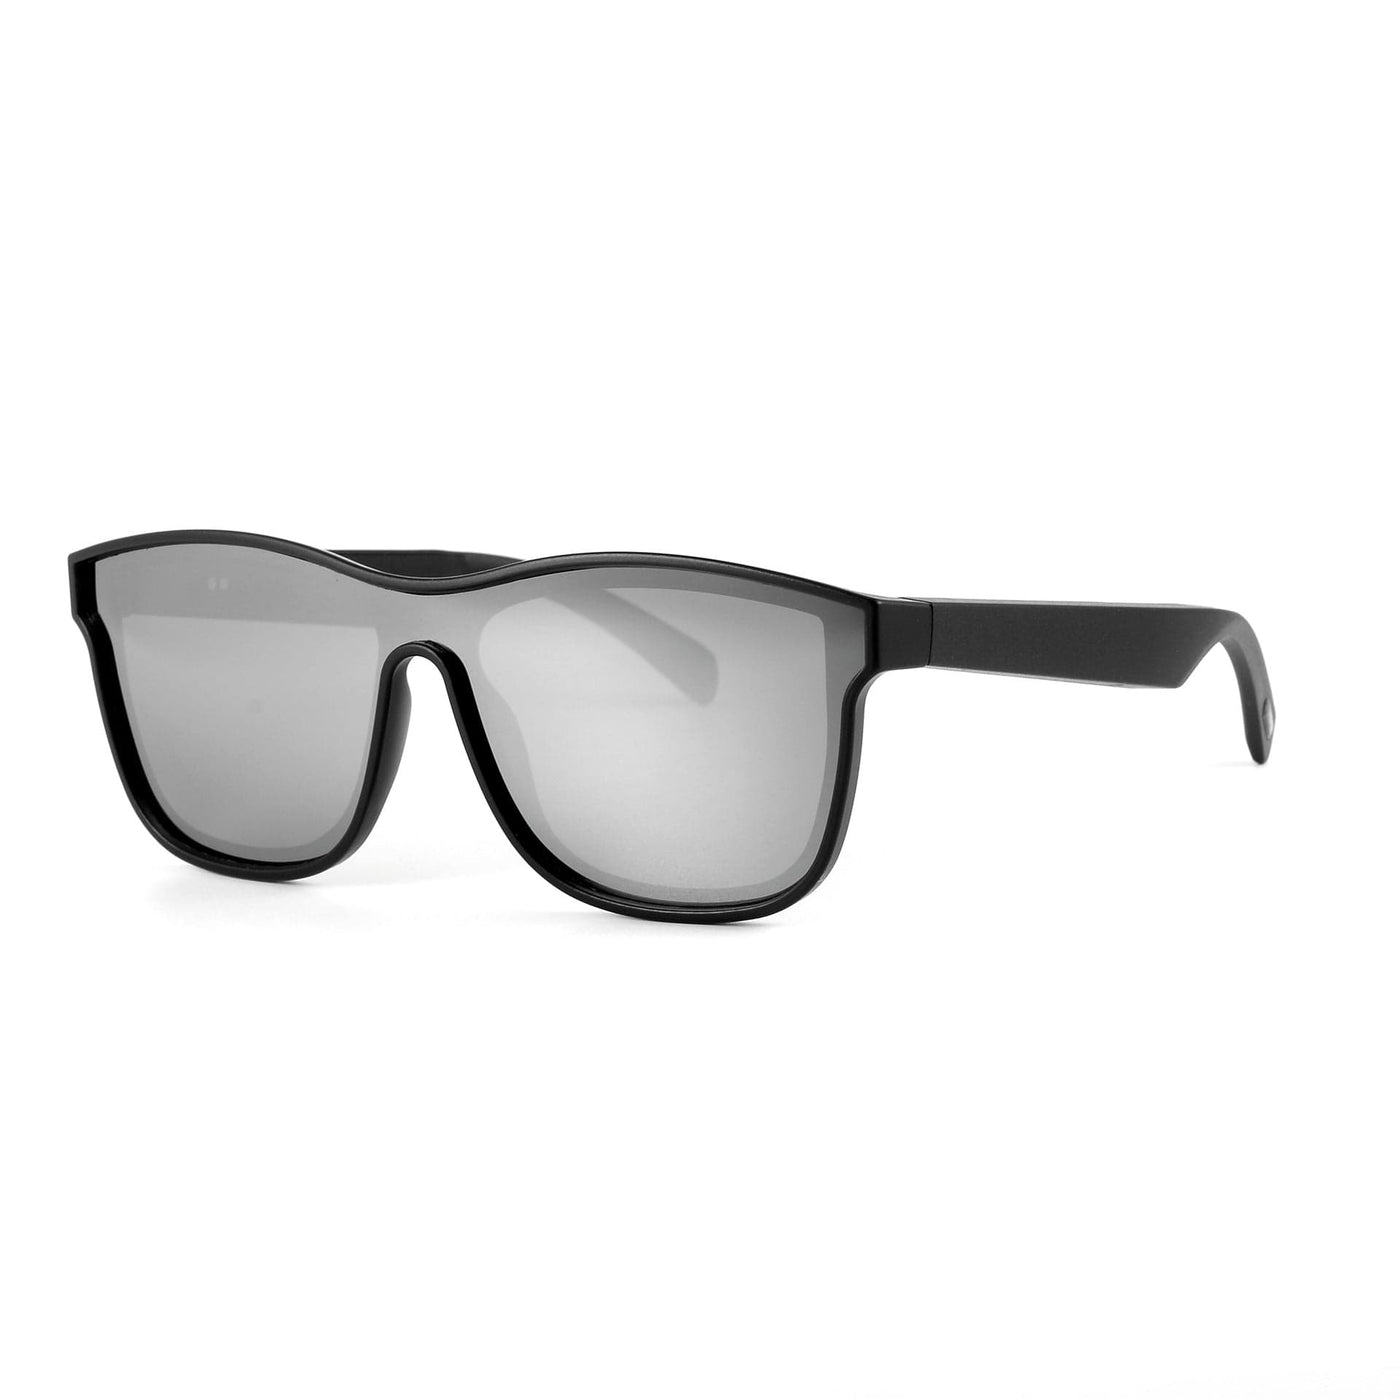 Smart Wireless Bluetooth Sunglasses - Smart Tech Shopping